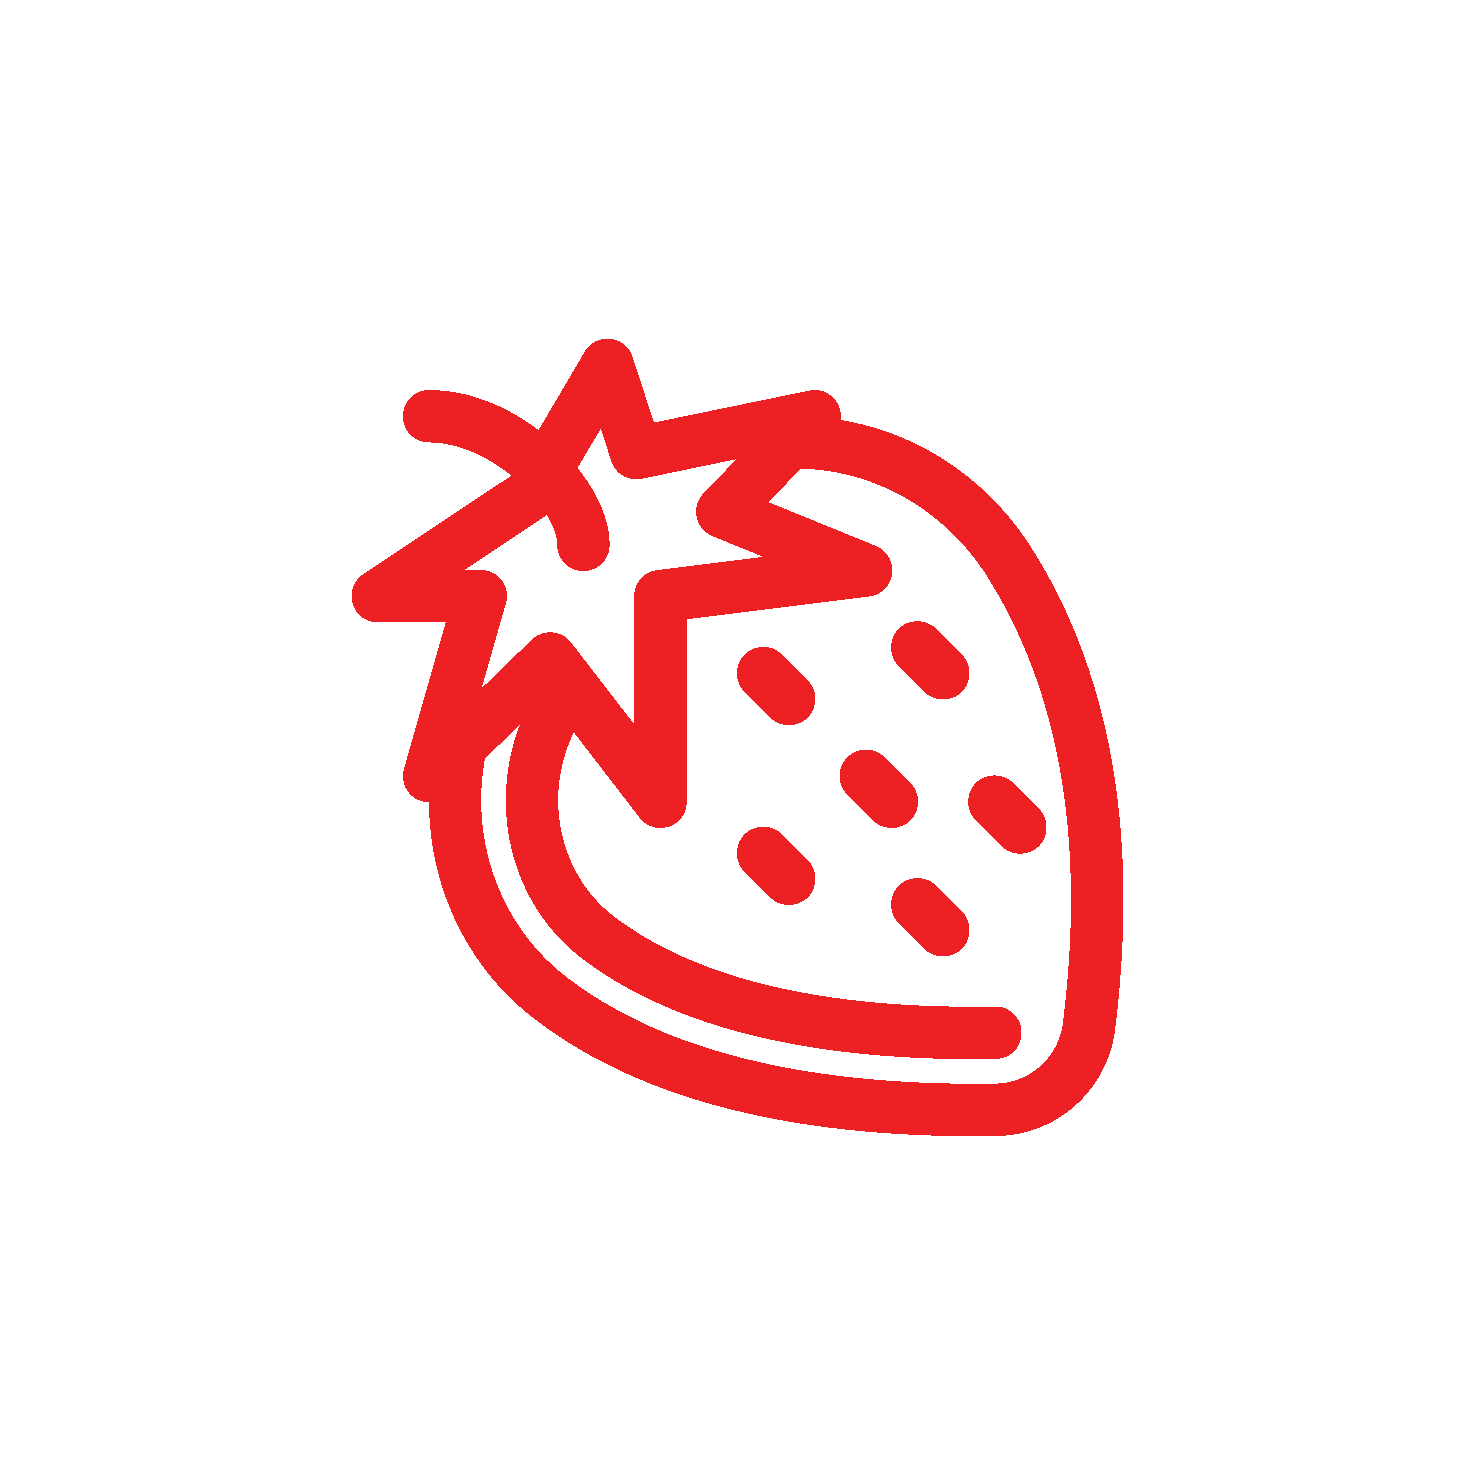 strawberry-icon-n-01-01